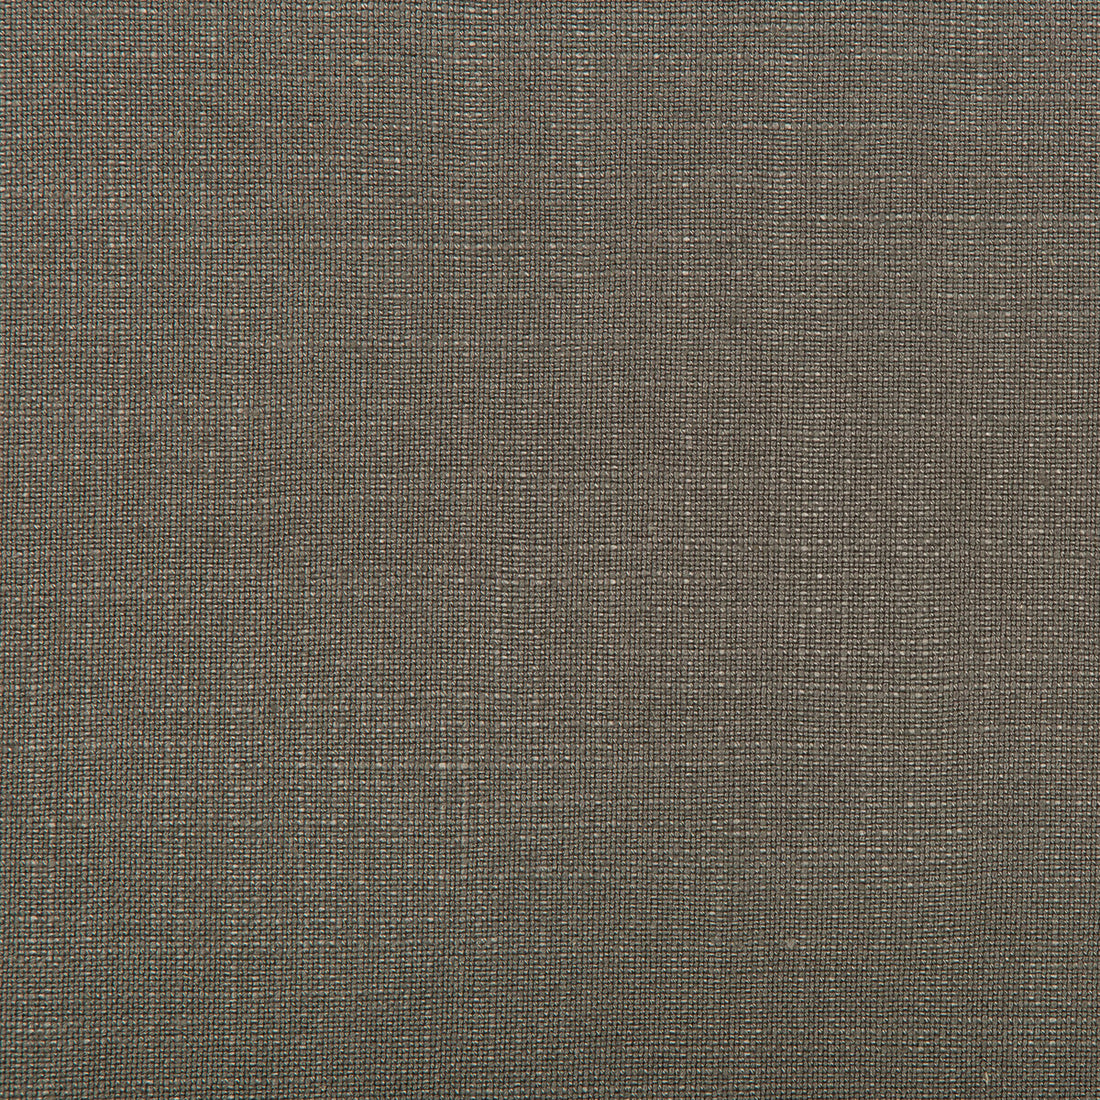 Aura fabric in steel color - pattern 35520.21.0 - by Kravet Design